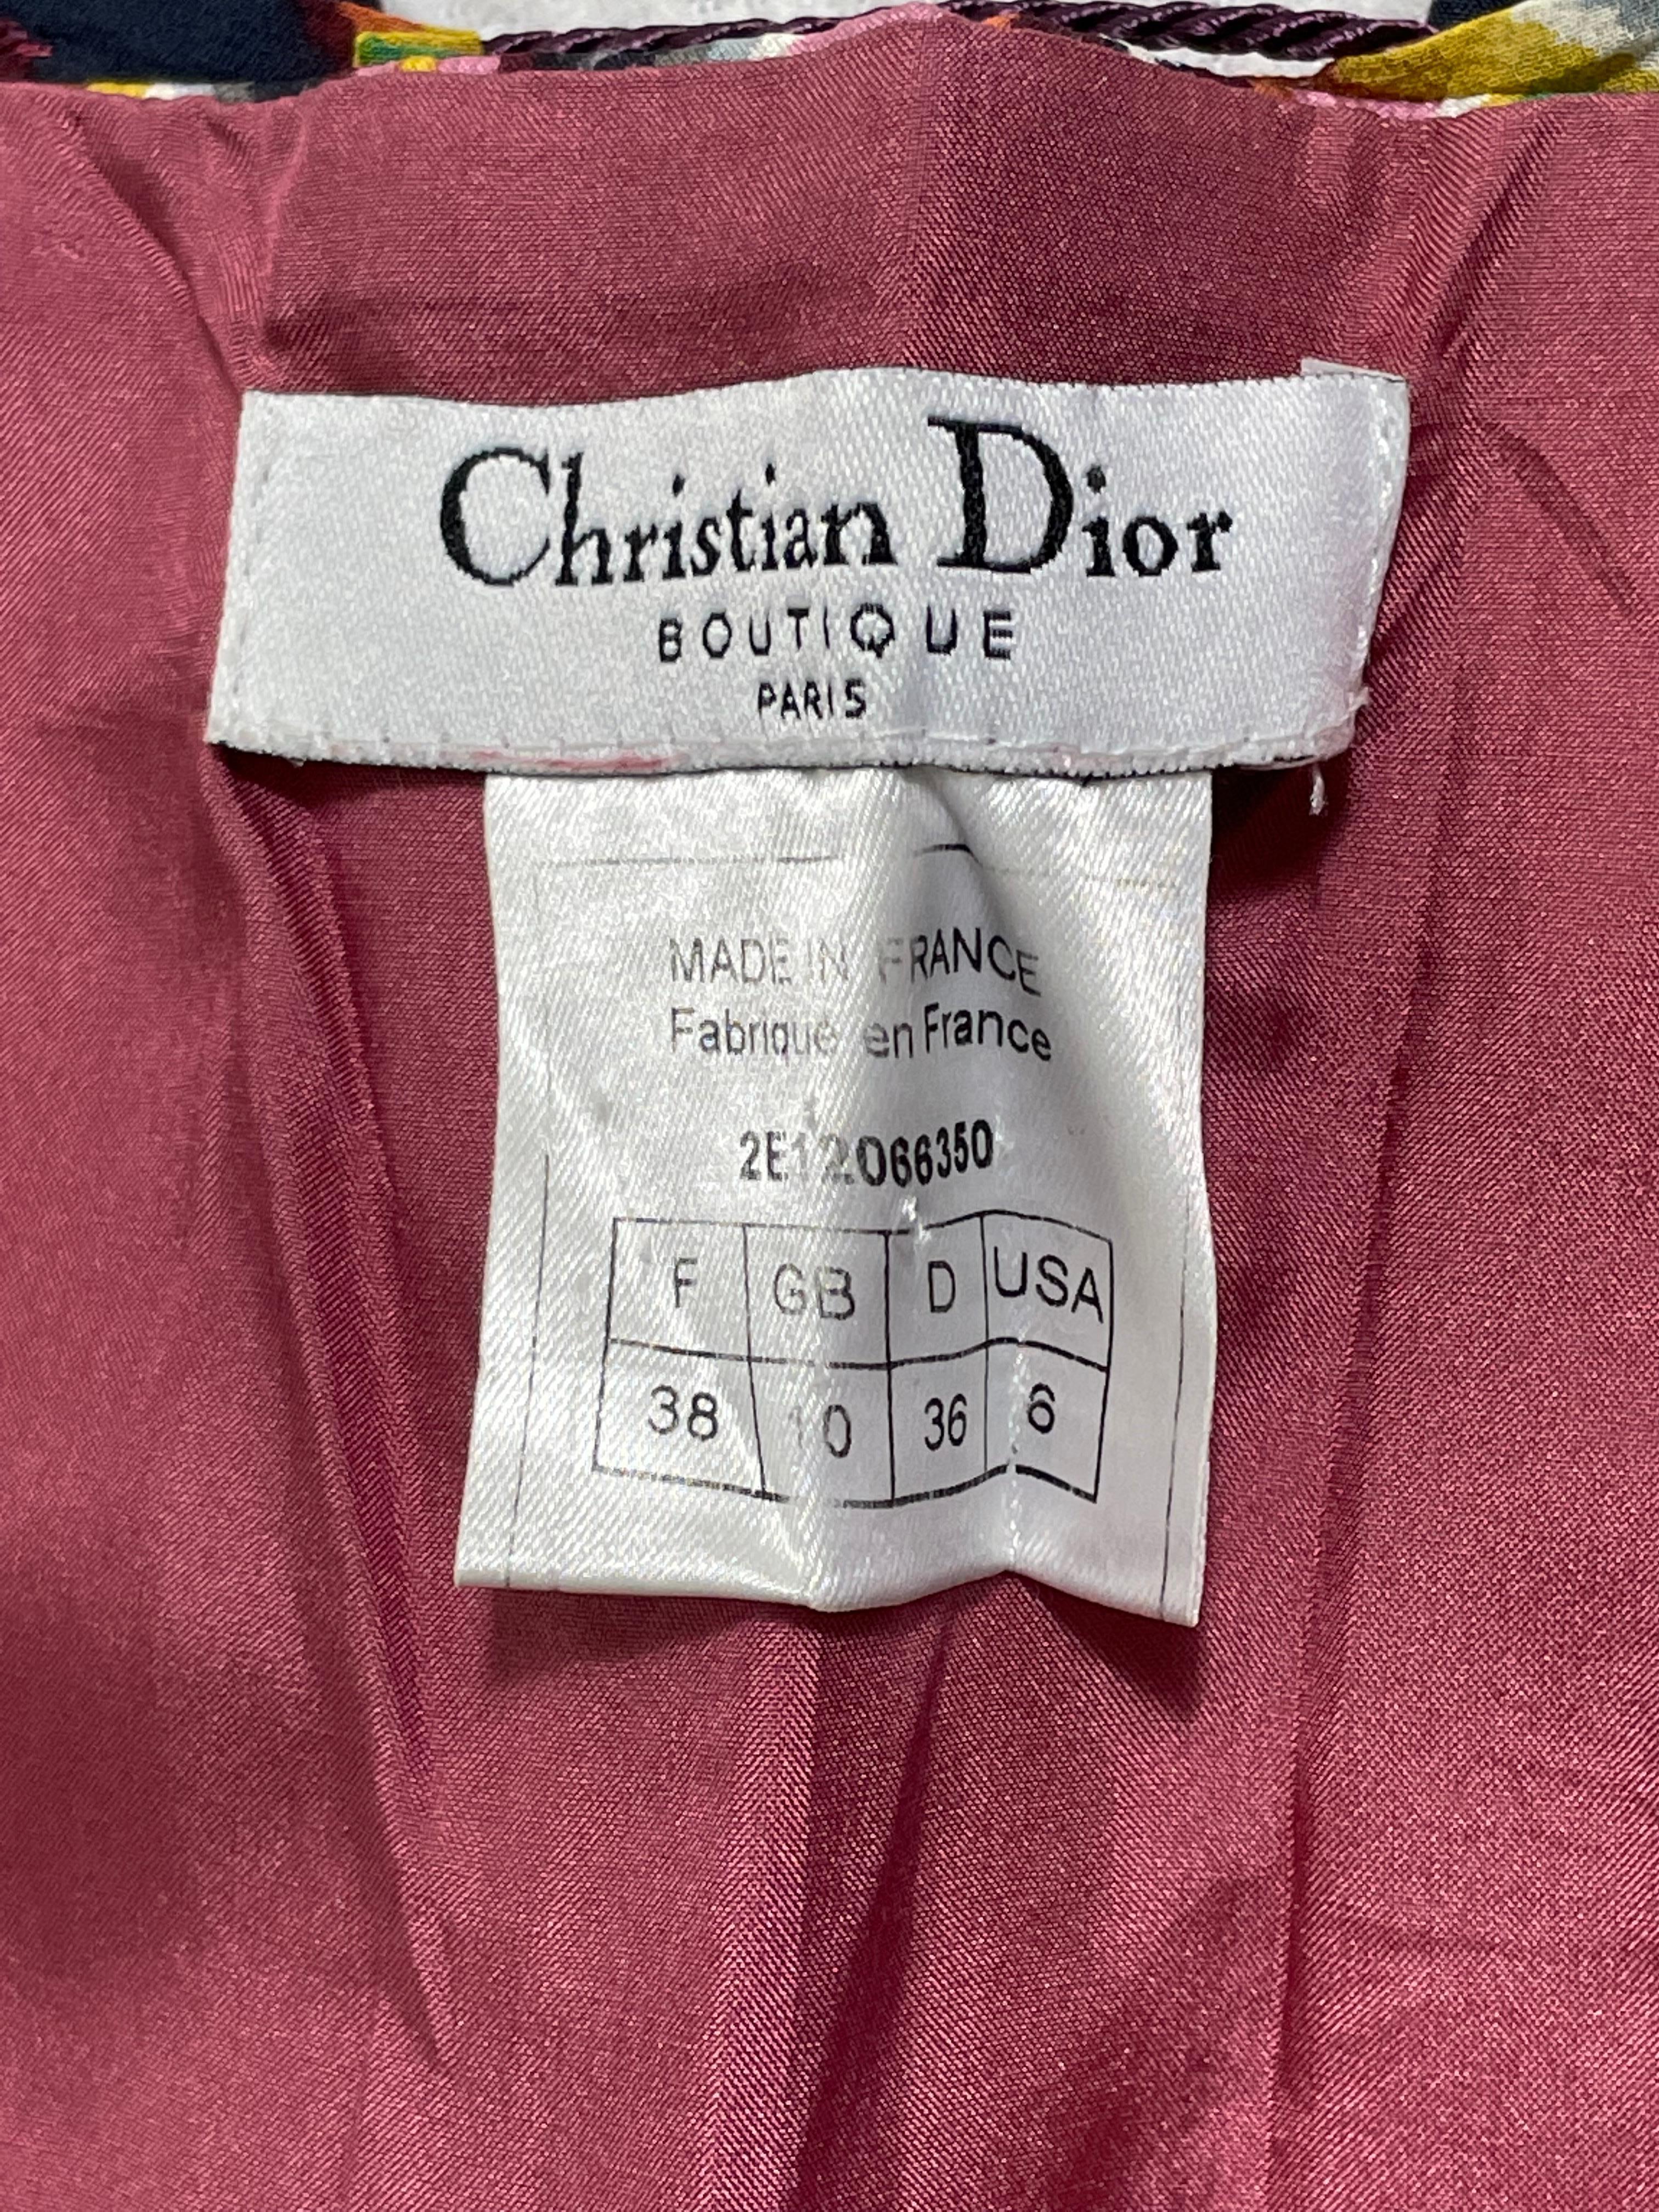 Women's S/S 2002 Christian Dior John Galliano Rasta Bustier Strapless Maxi Dress